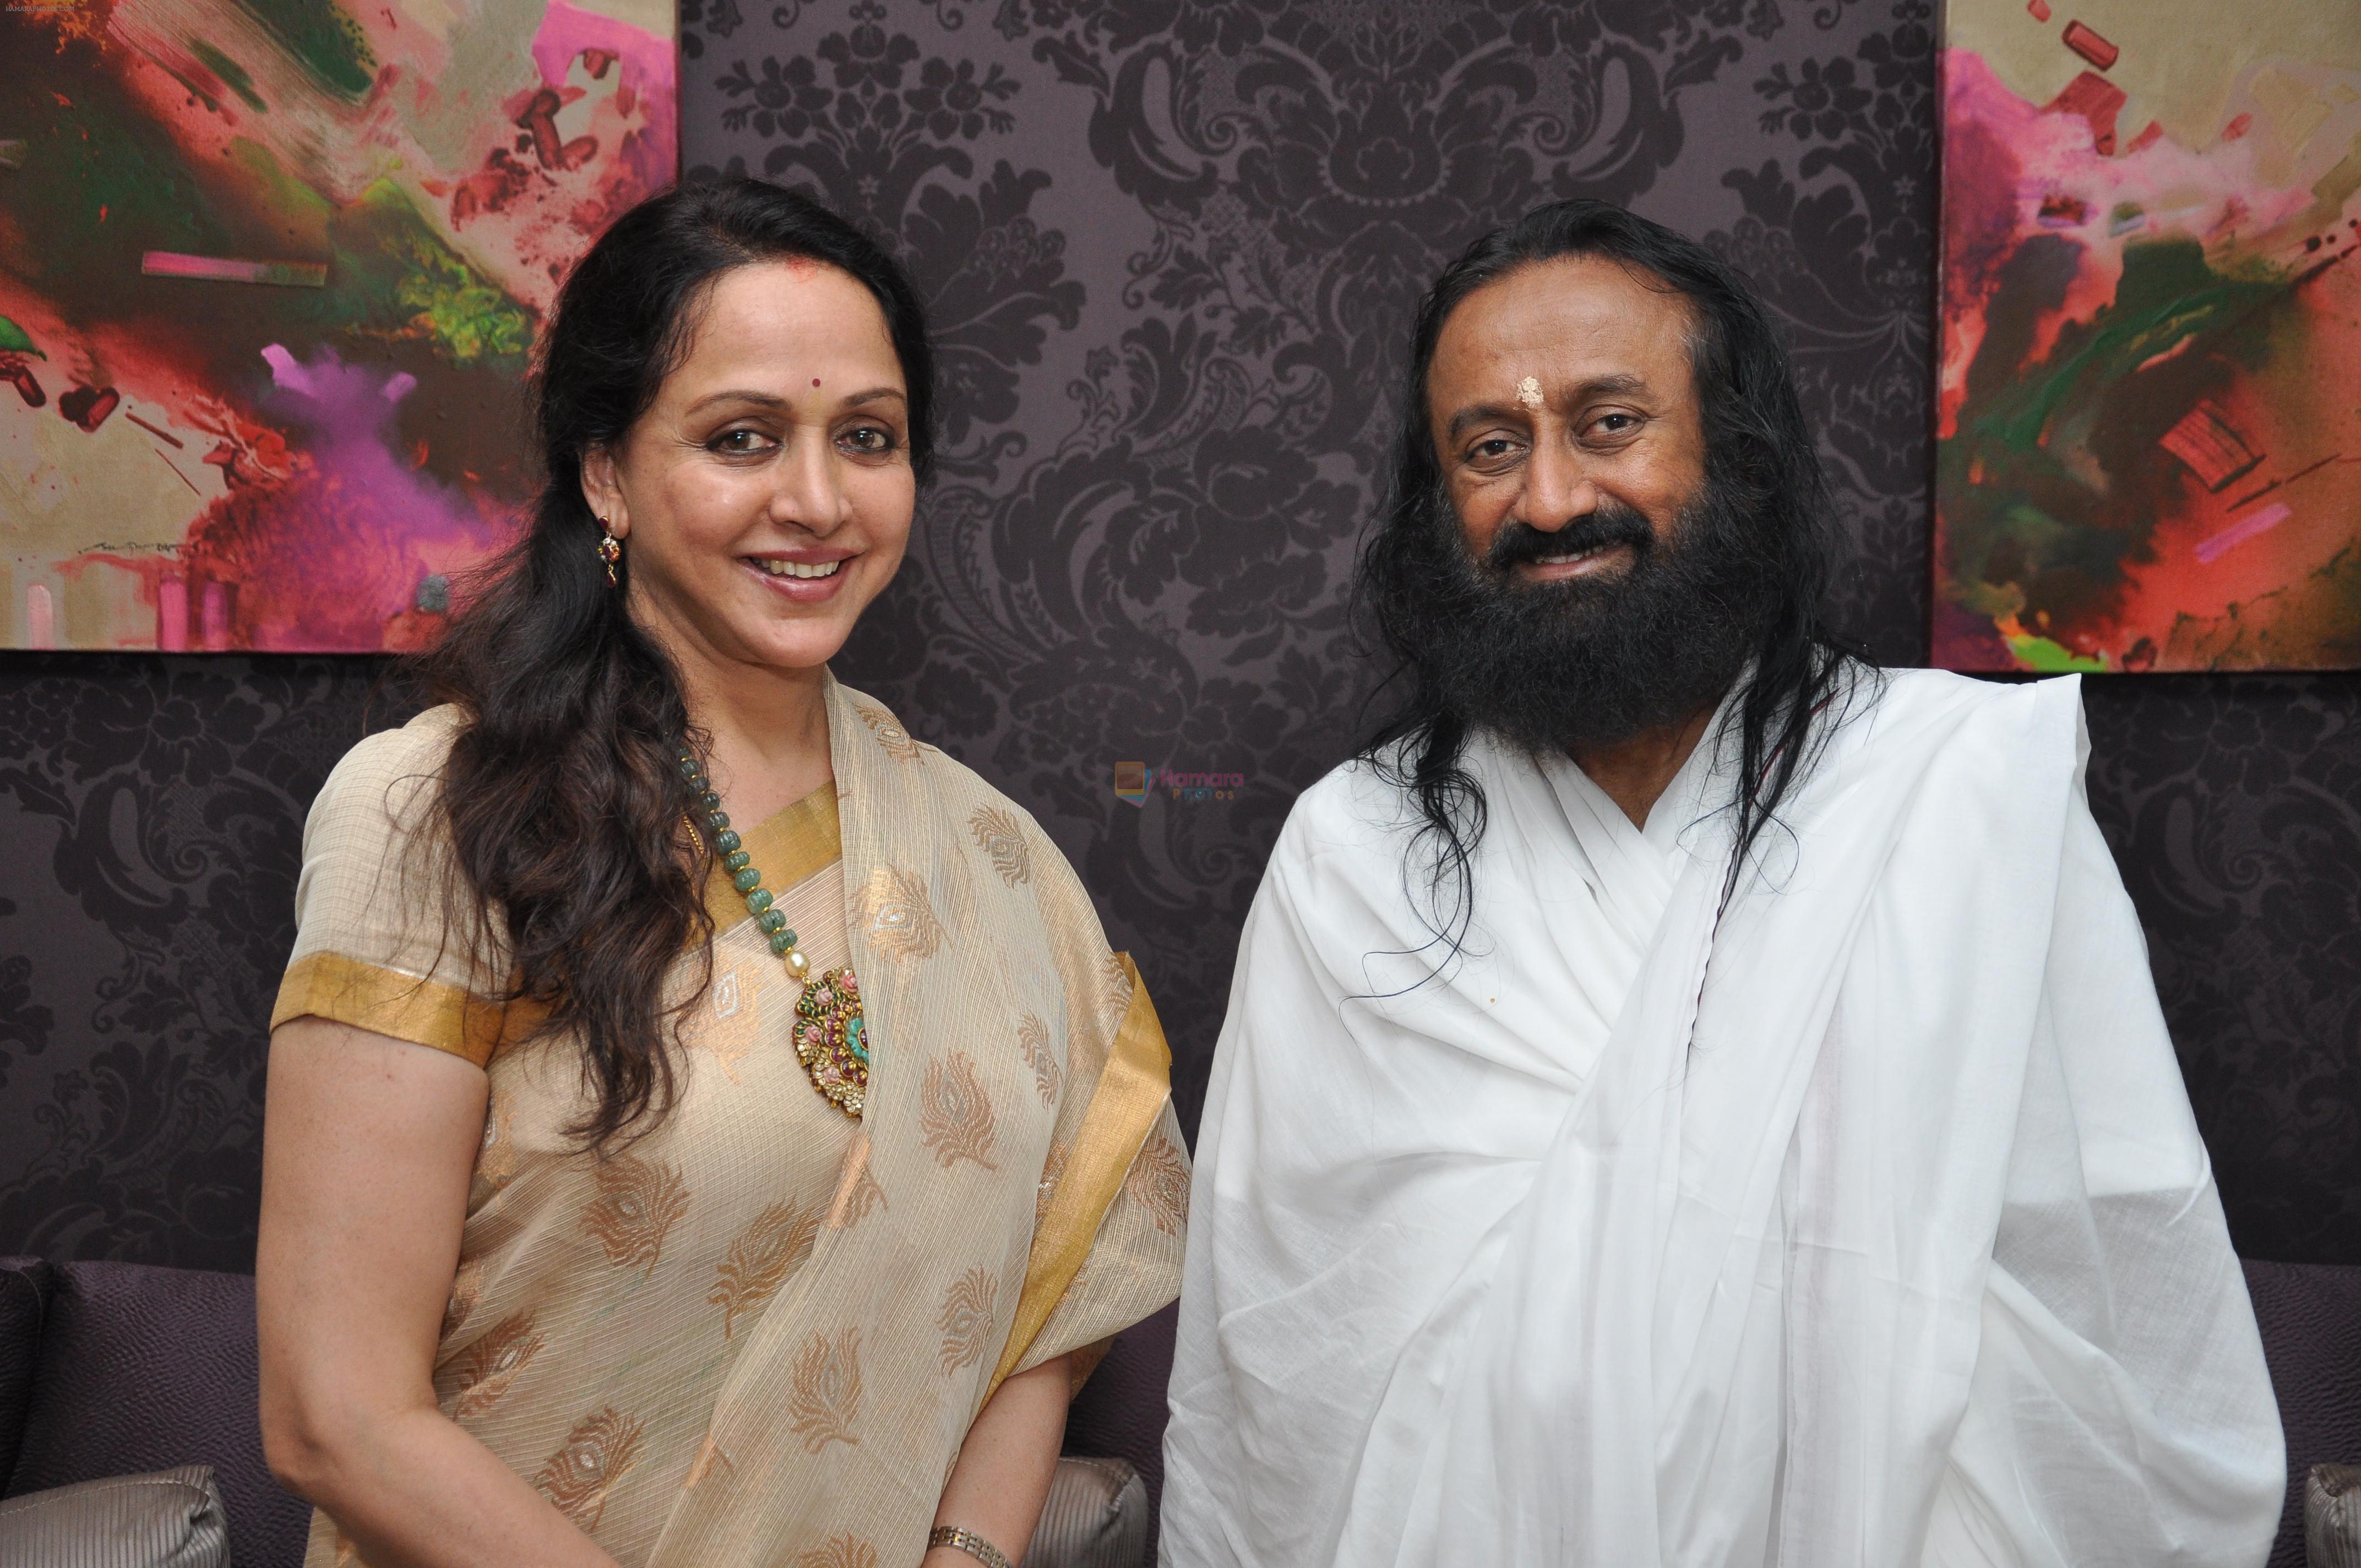 Hemaji with Sri Sri Ravishankar at Hema Malini's new home named Advitiya inaugurated by Sri Sri Ravi Shankar in Mumbai on 3rd March 2013